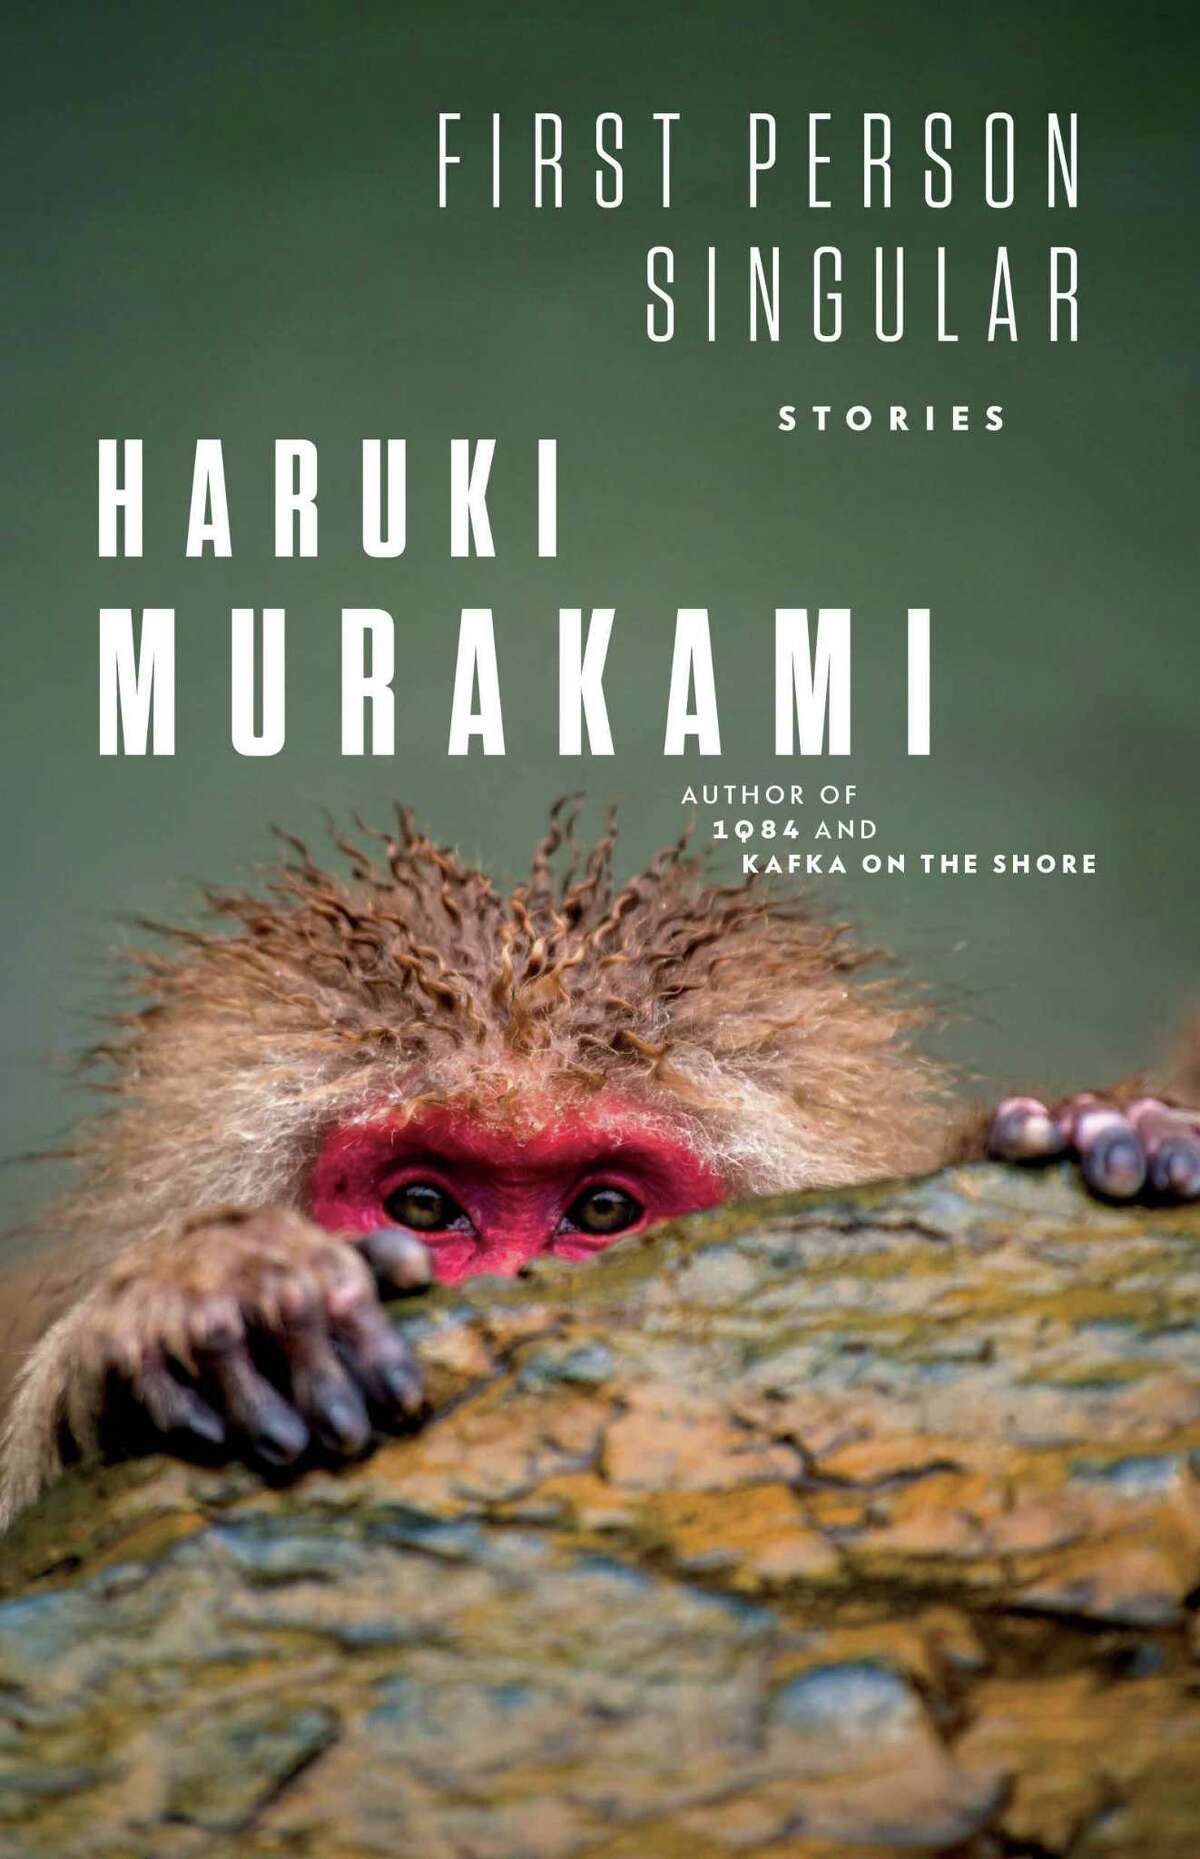 “First Person Singular” by Haruki Murakami